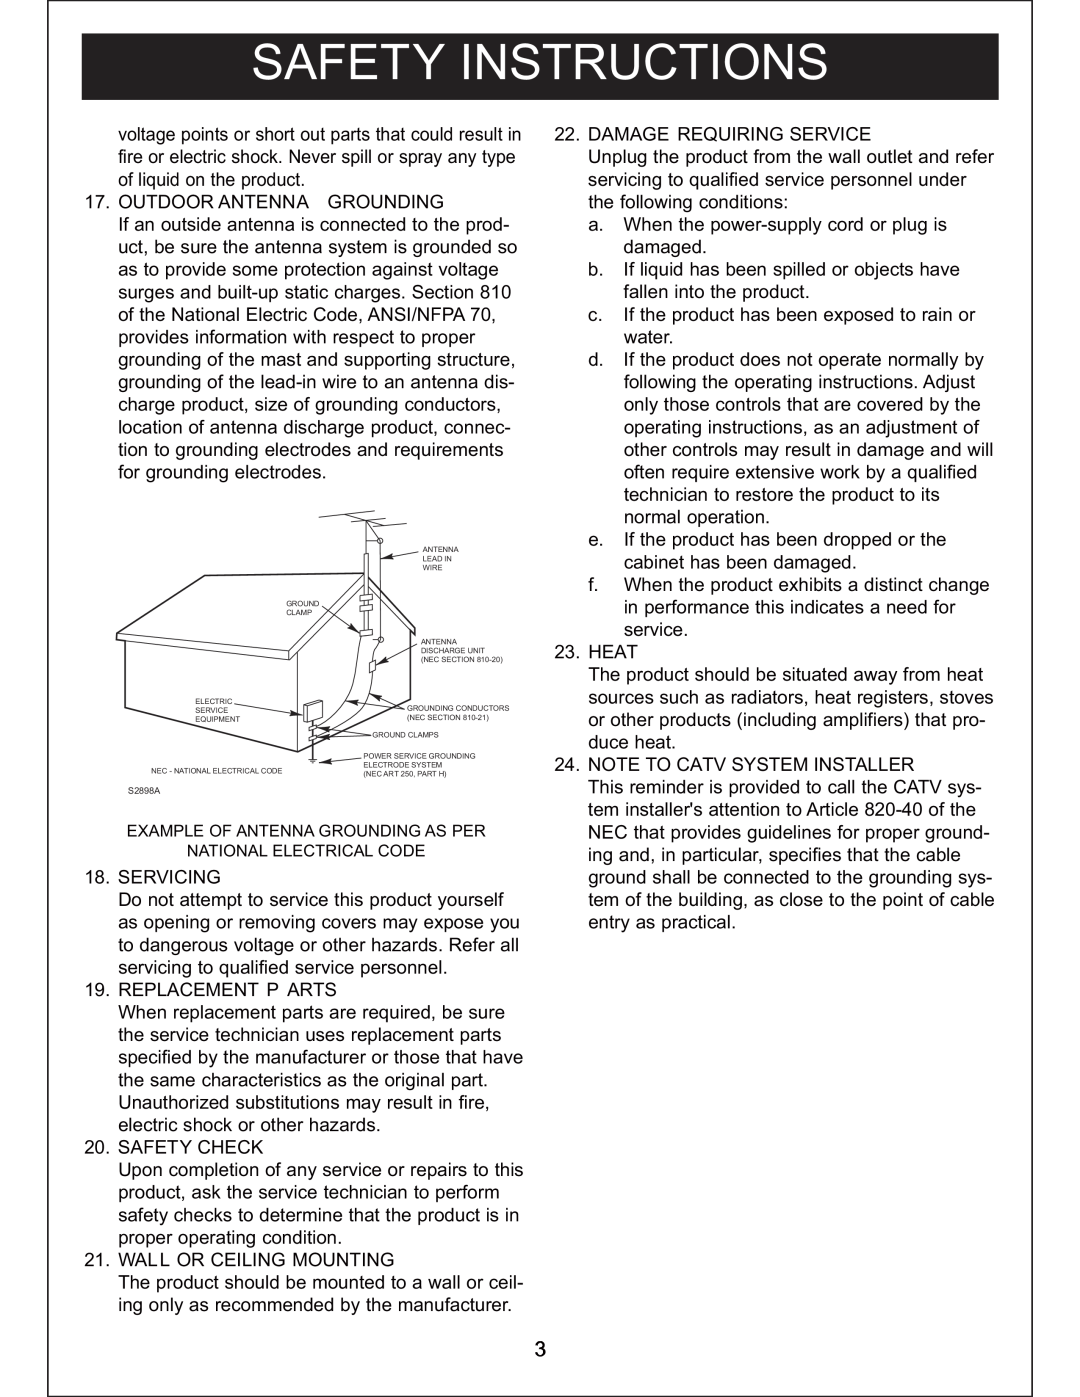 Sylvania SIP3019 instruction manual Safety Instructions, Outdoor Antenna Grounding 